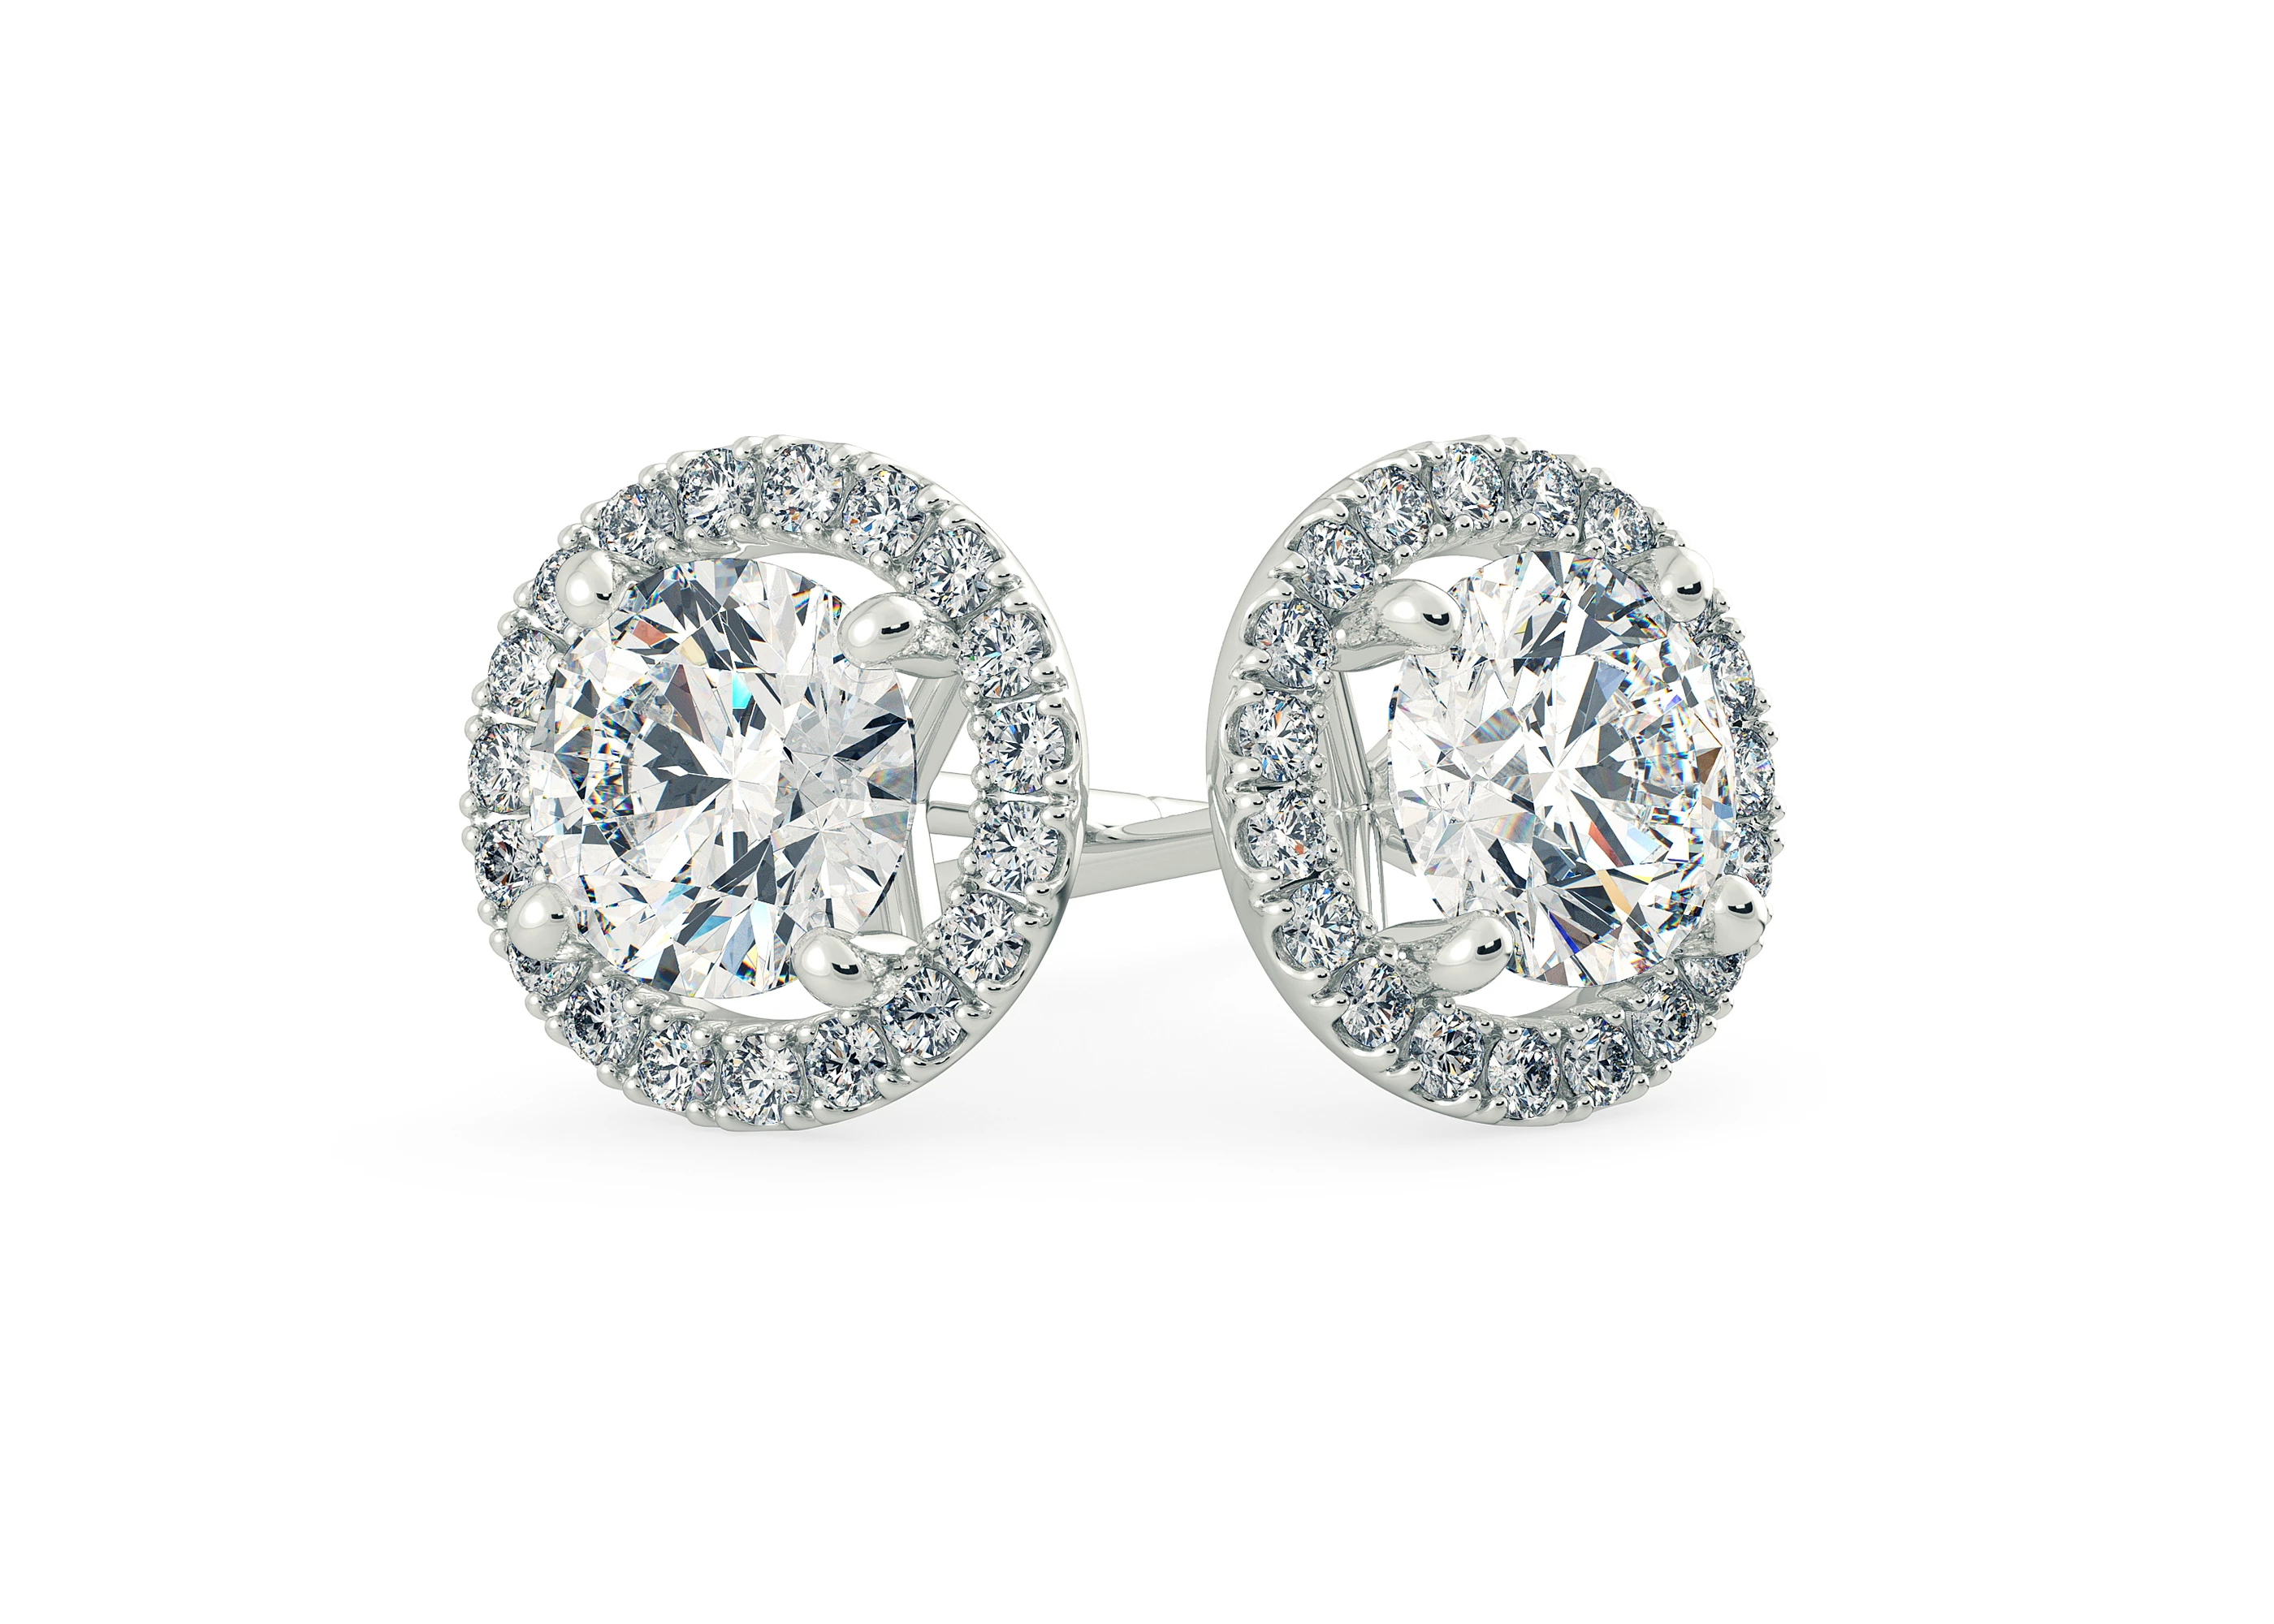 Bijou Round Brilliant Diamond Stud Earrings in Platinum with Alpha Backs